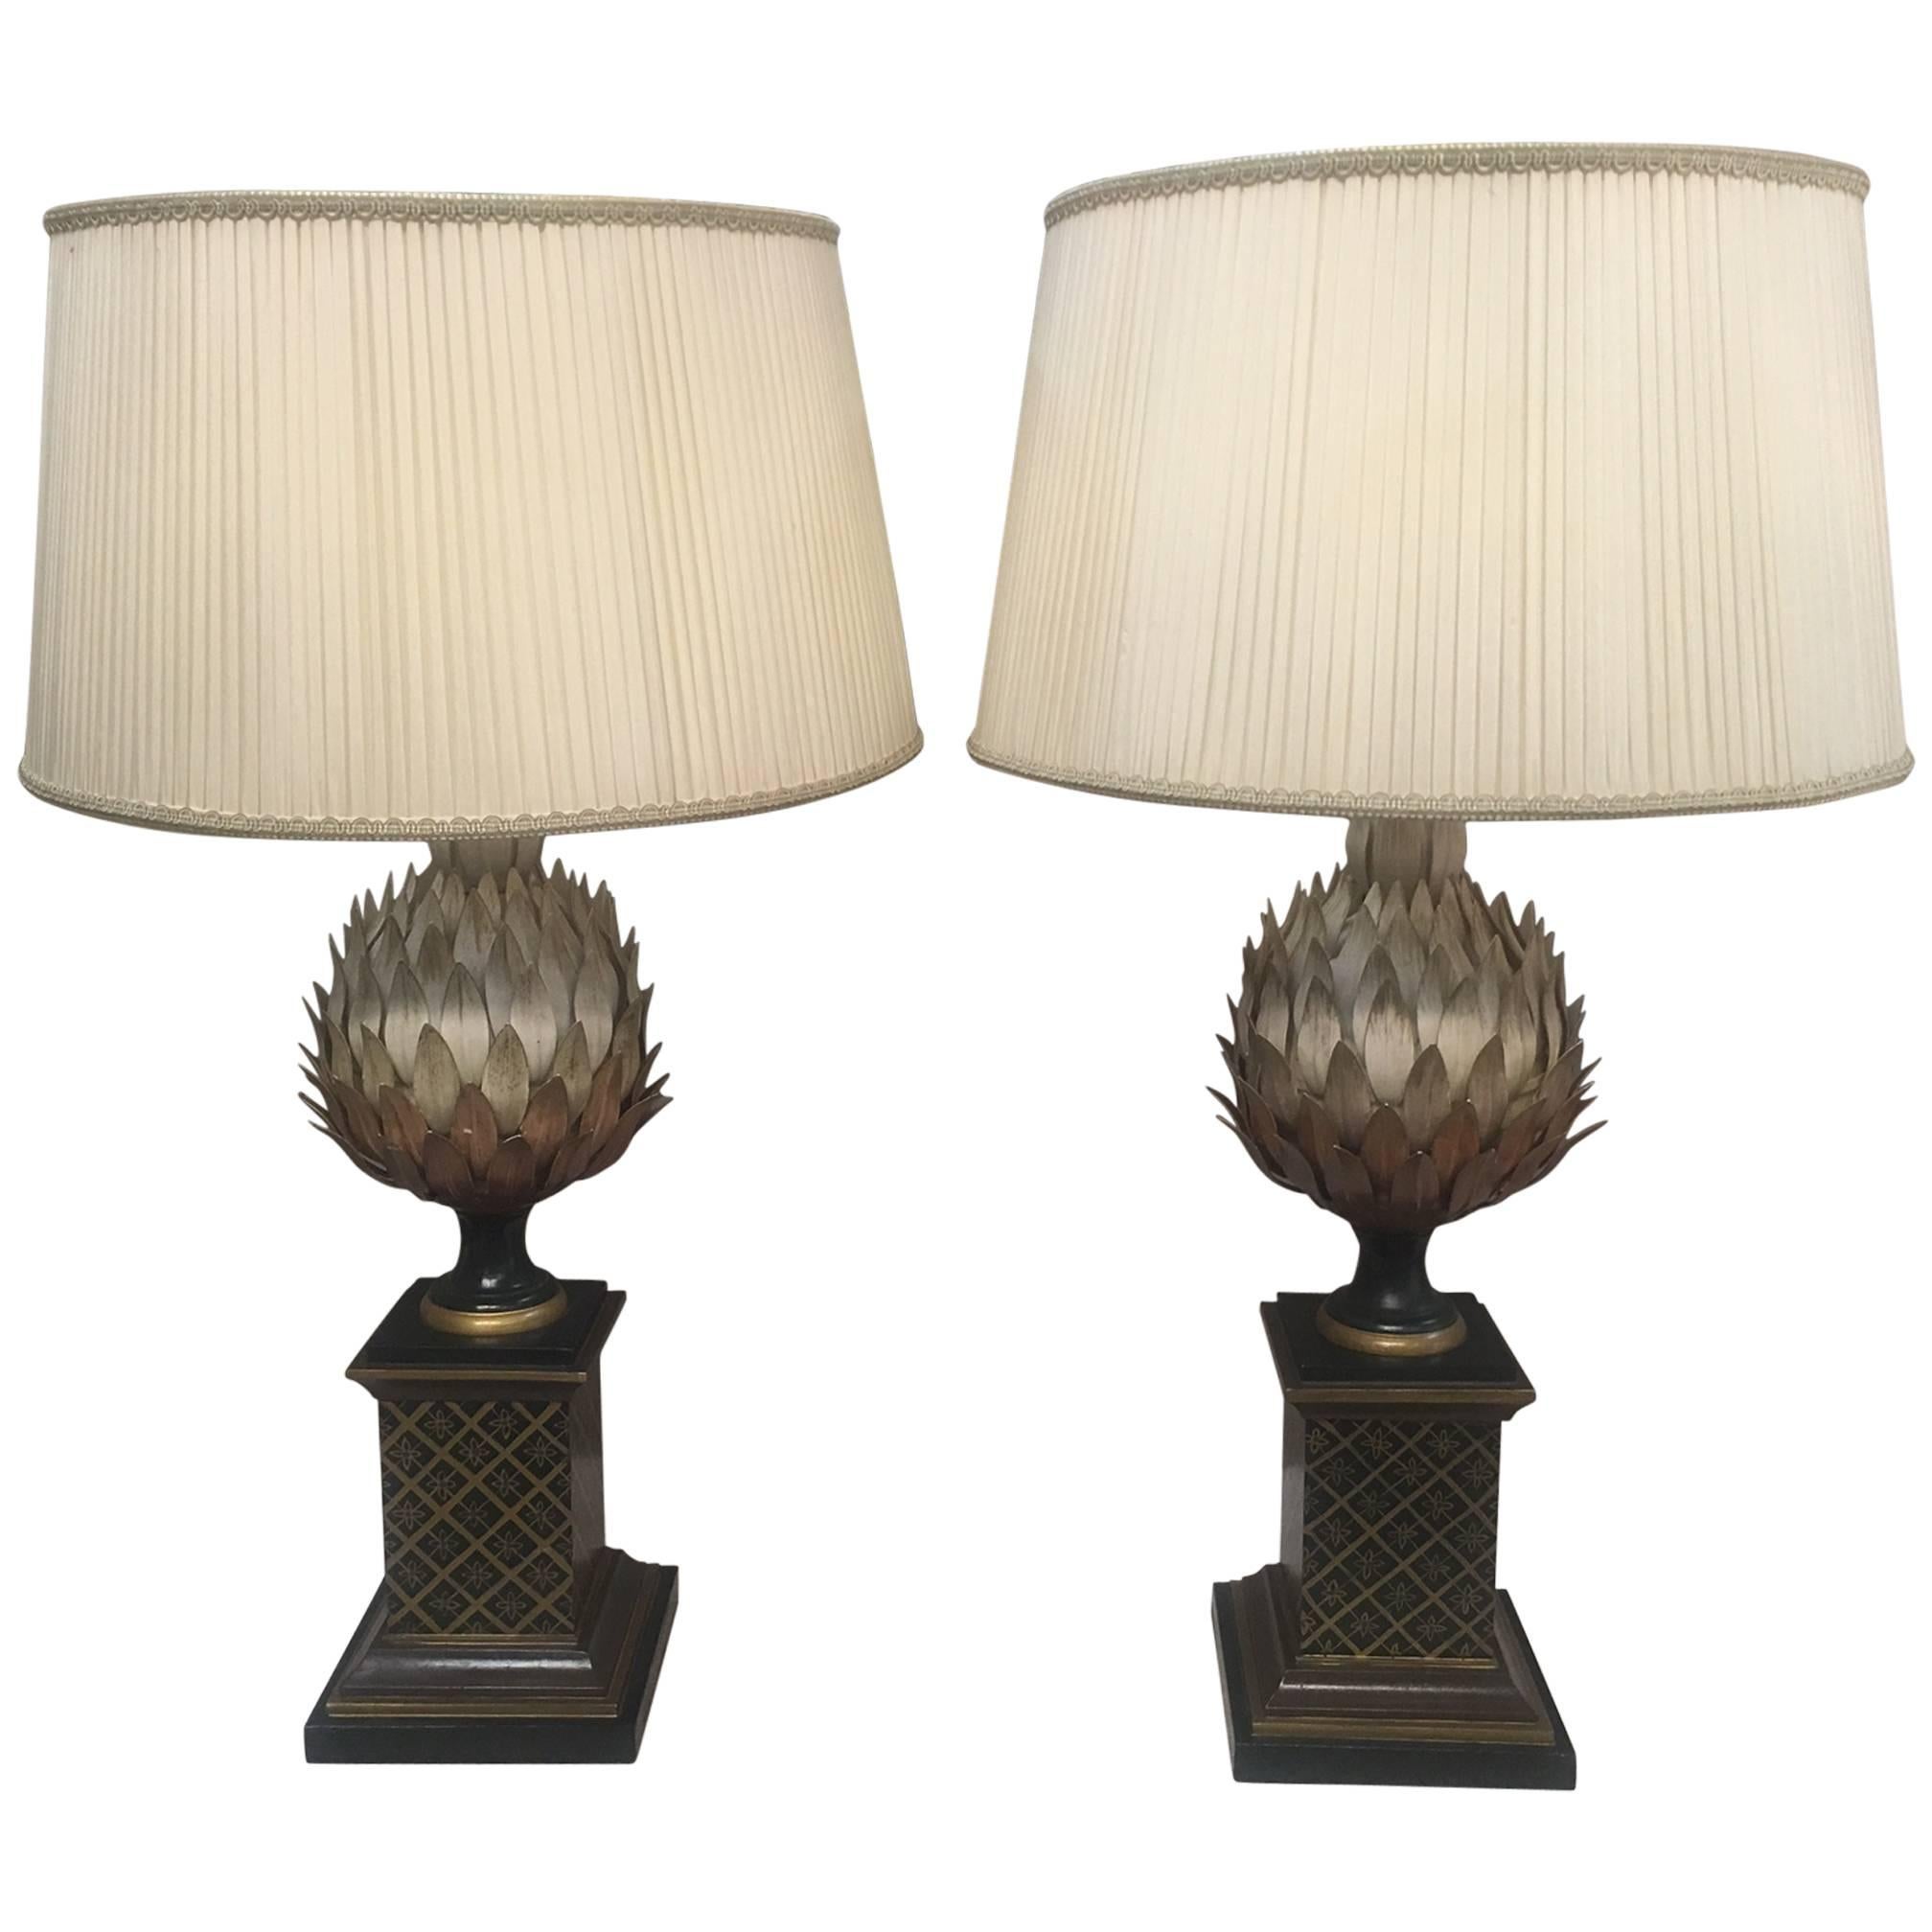 Pair of Painted Tole Artichoke Lamps